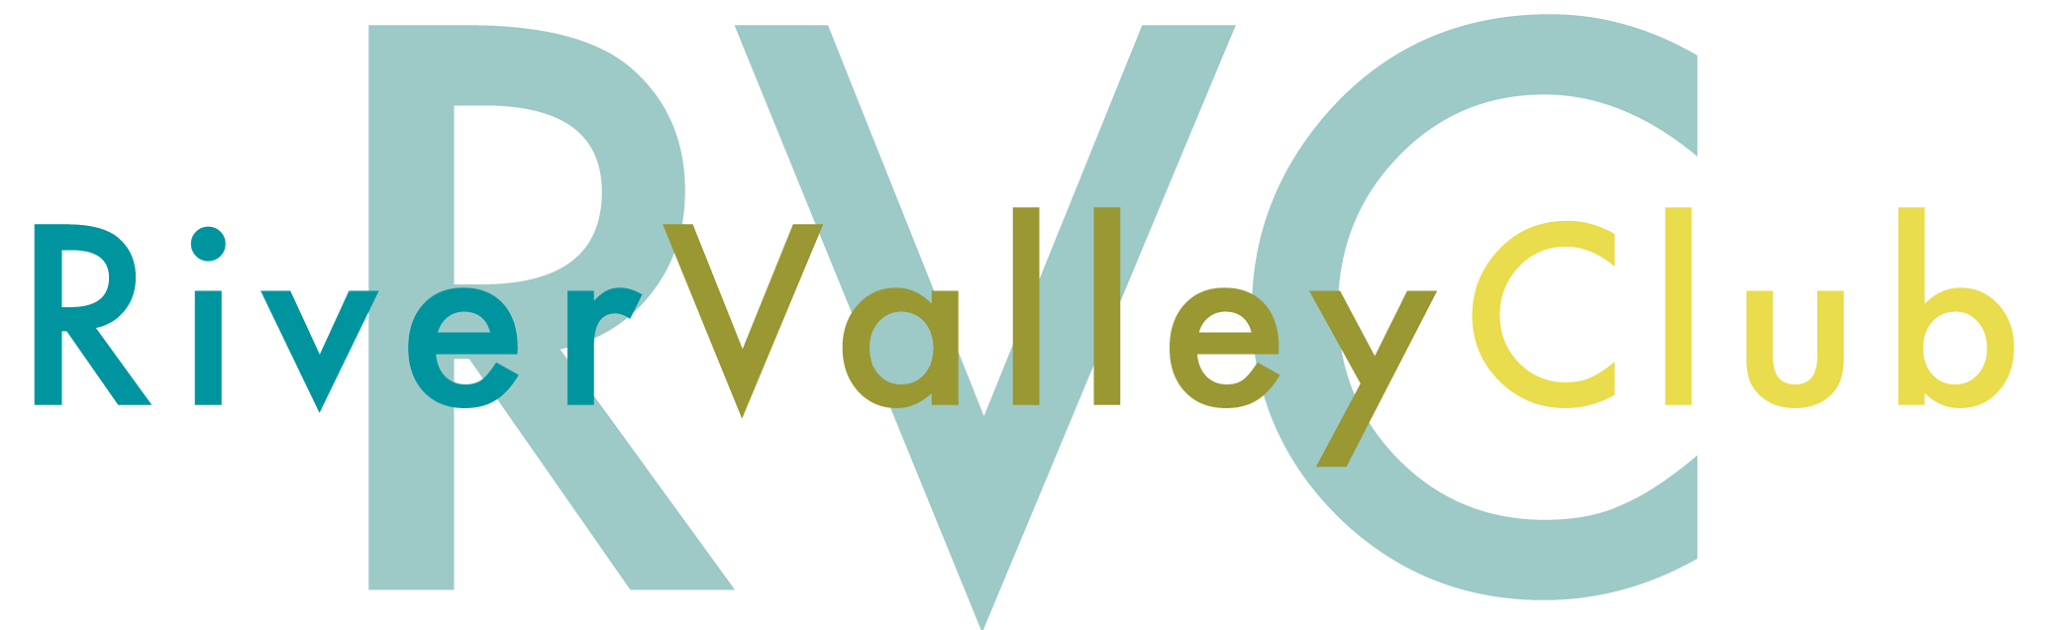 River Valley Club